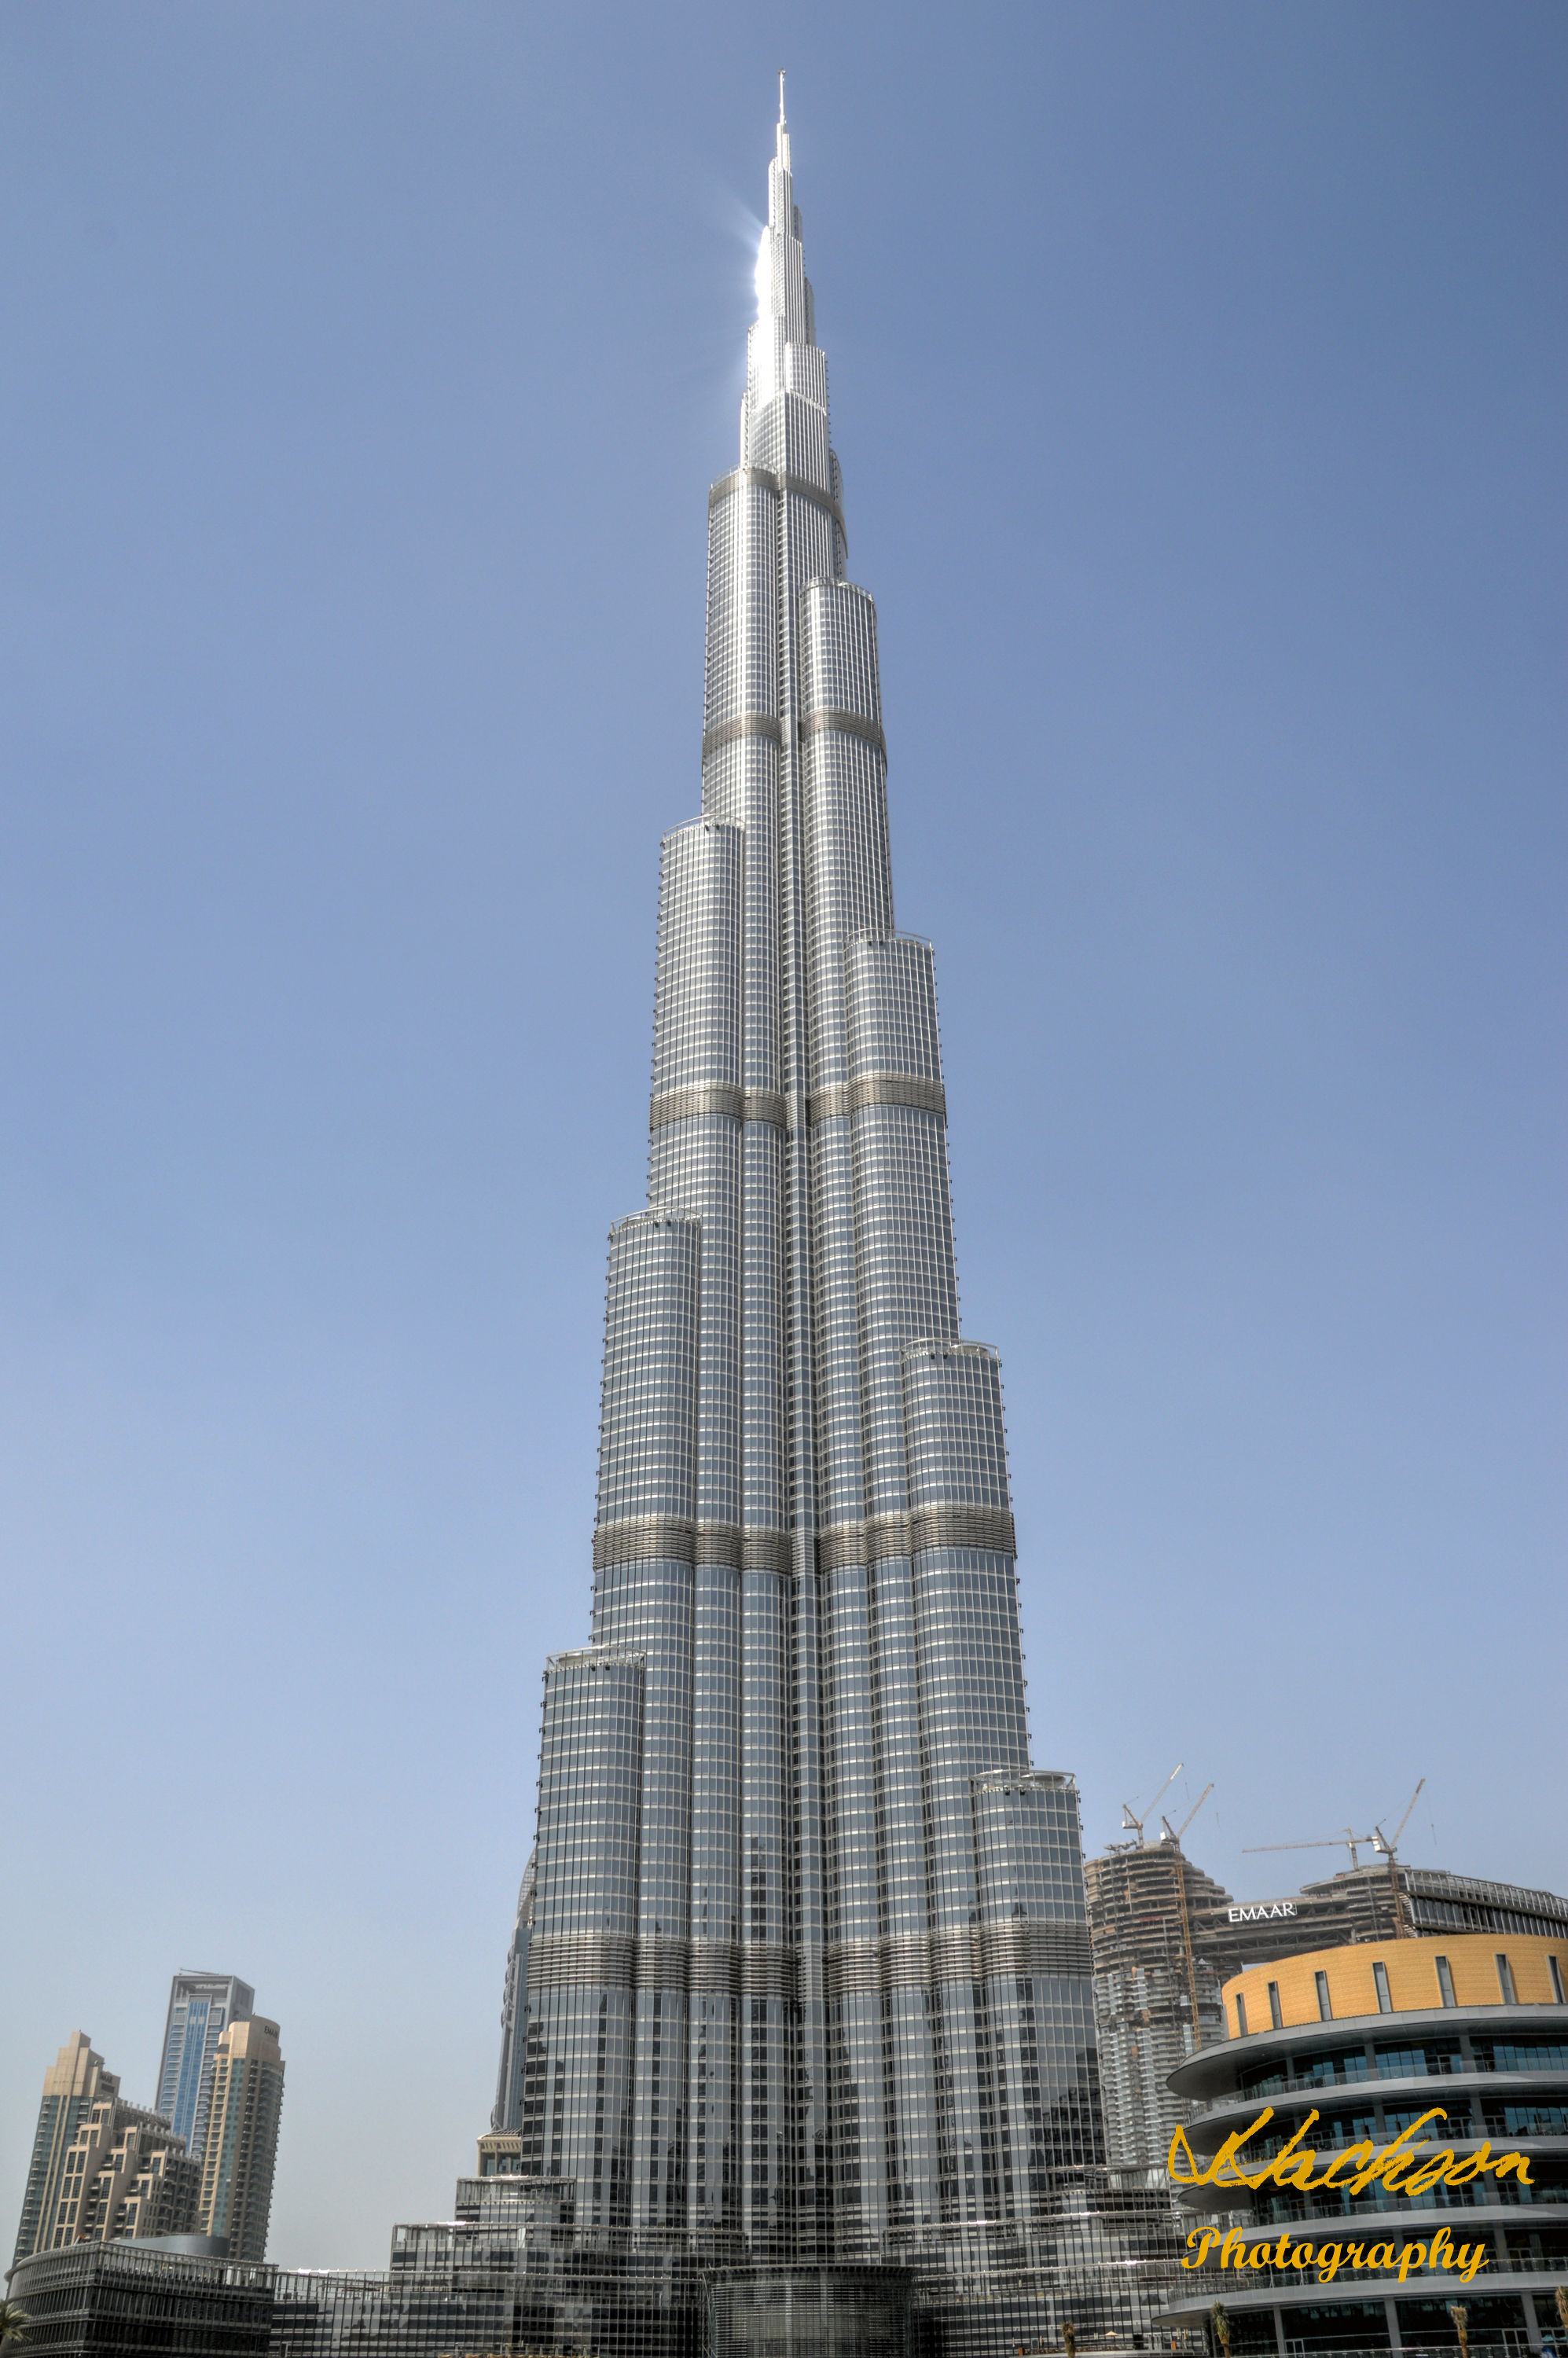 Burj Khalifa The Tallest Building in the World Jim Jackson